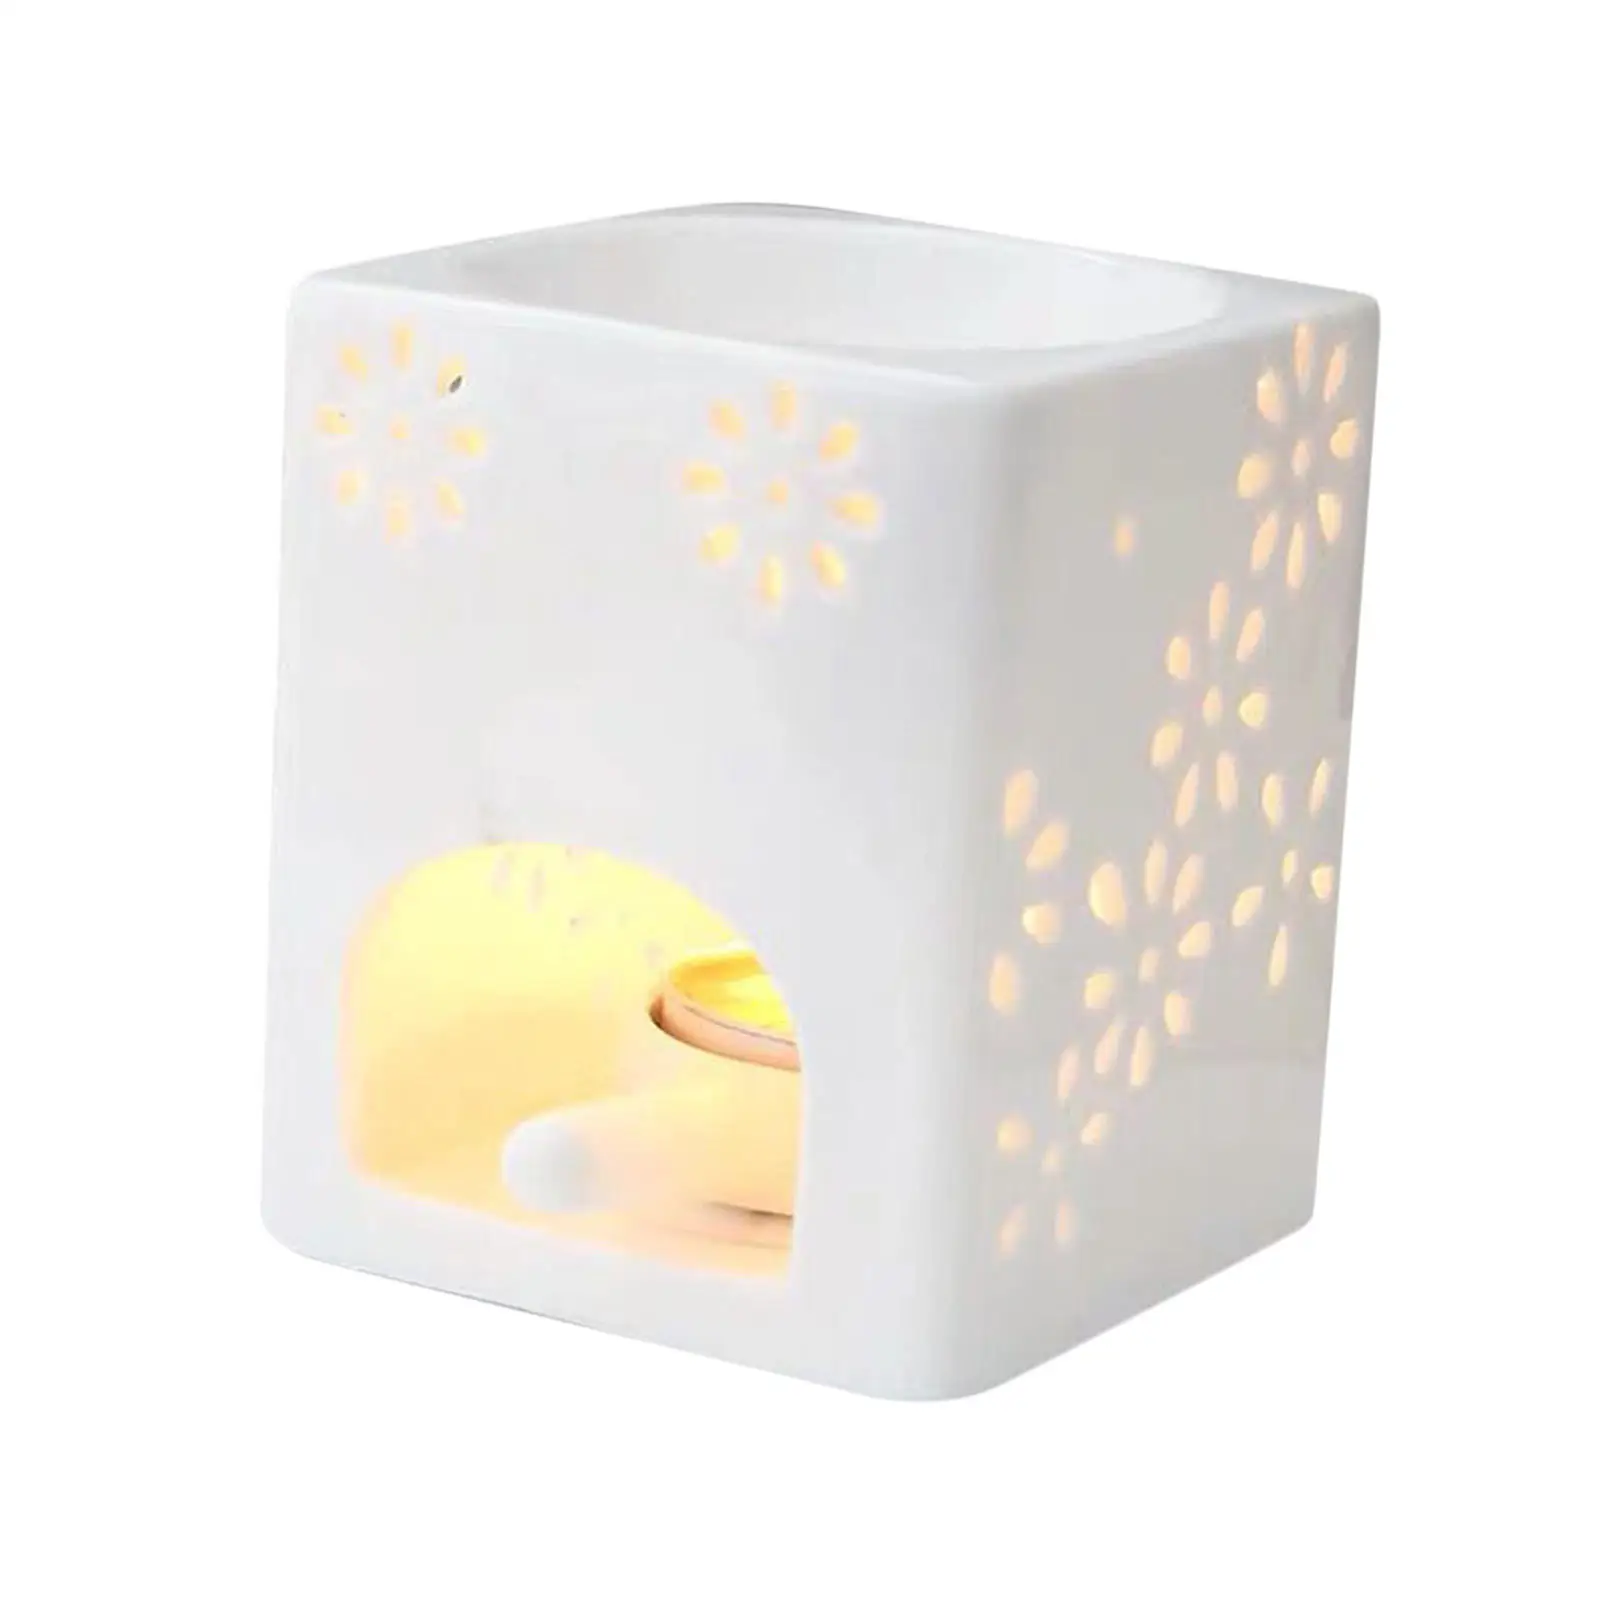 Ceramic Tealight Candle Holder Essential Oil Burner Aroma Diffuser Furnace Home Decoration Romantic White